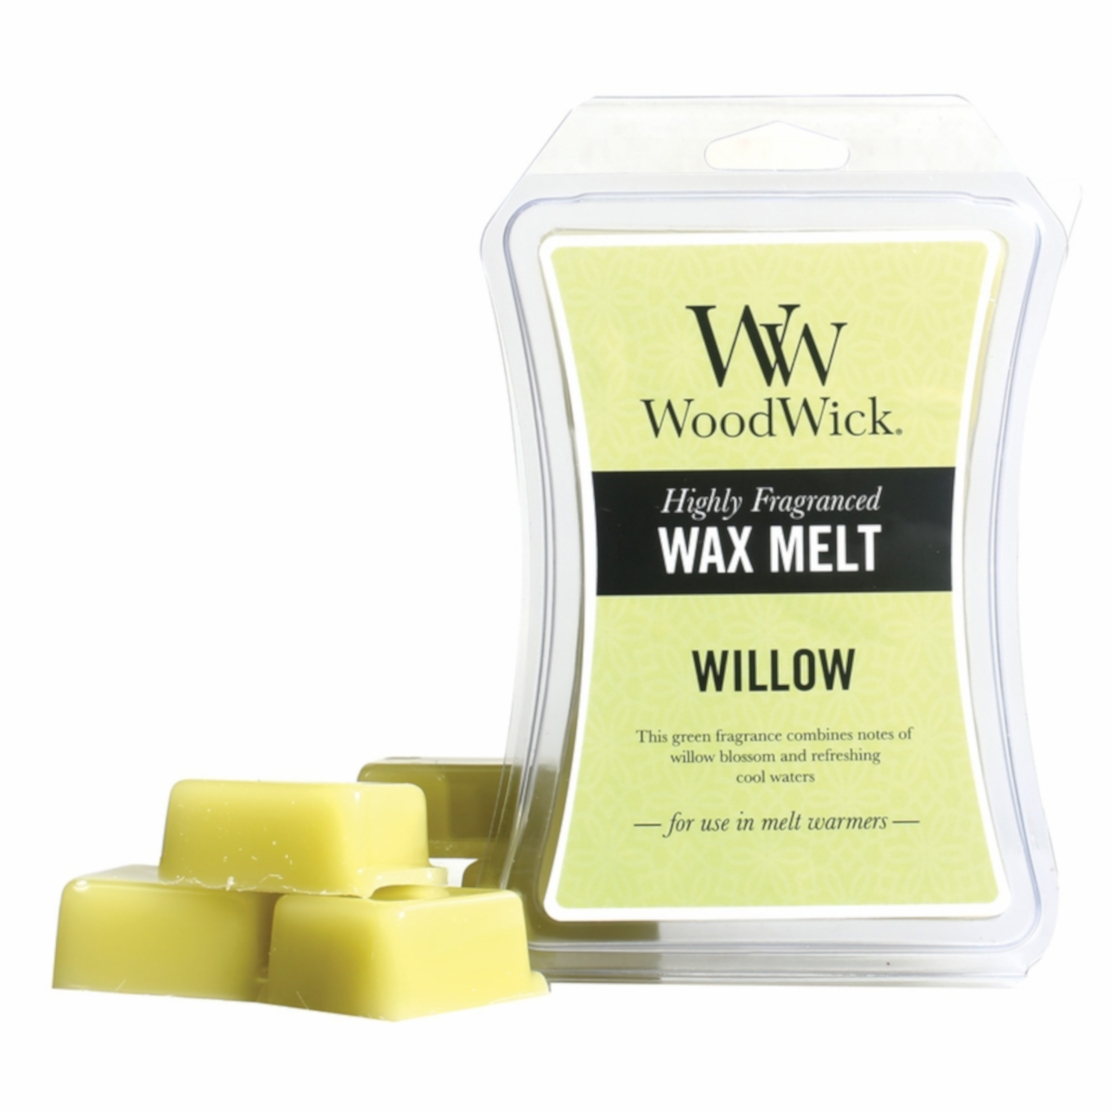 Woodwick Willow Wax Melt